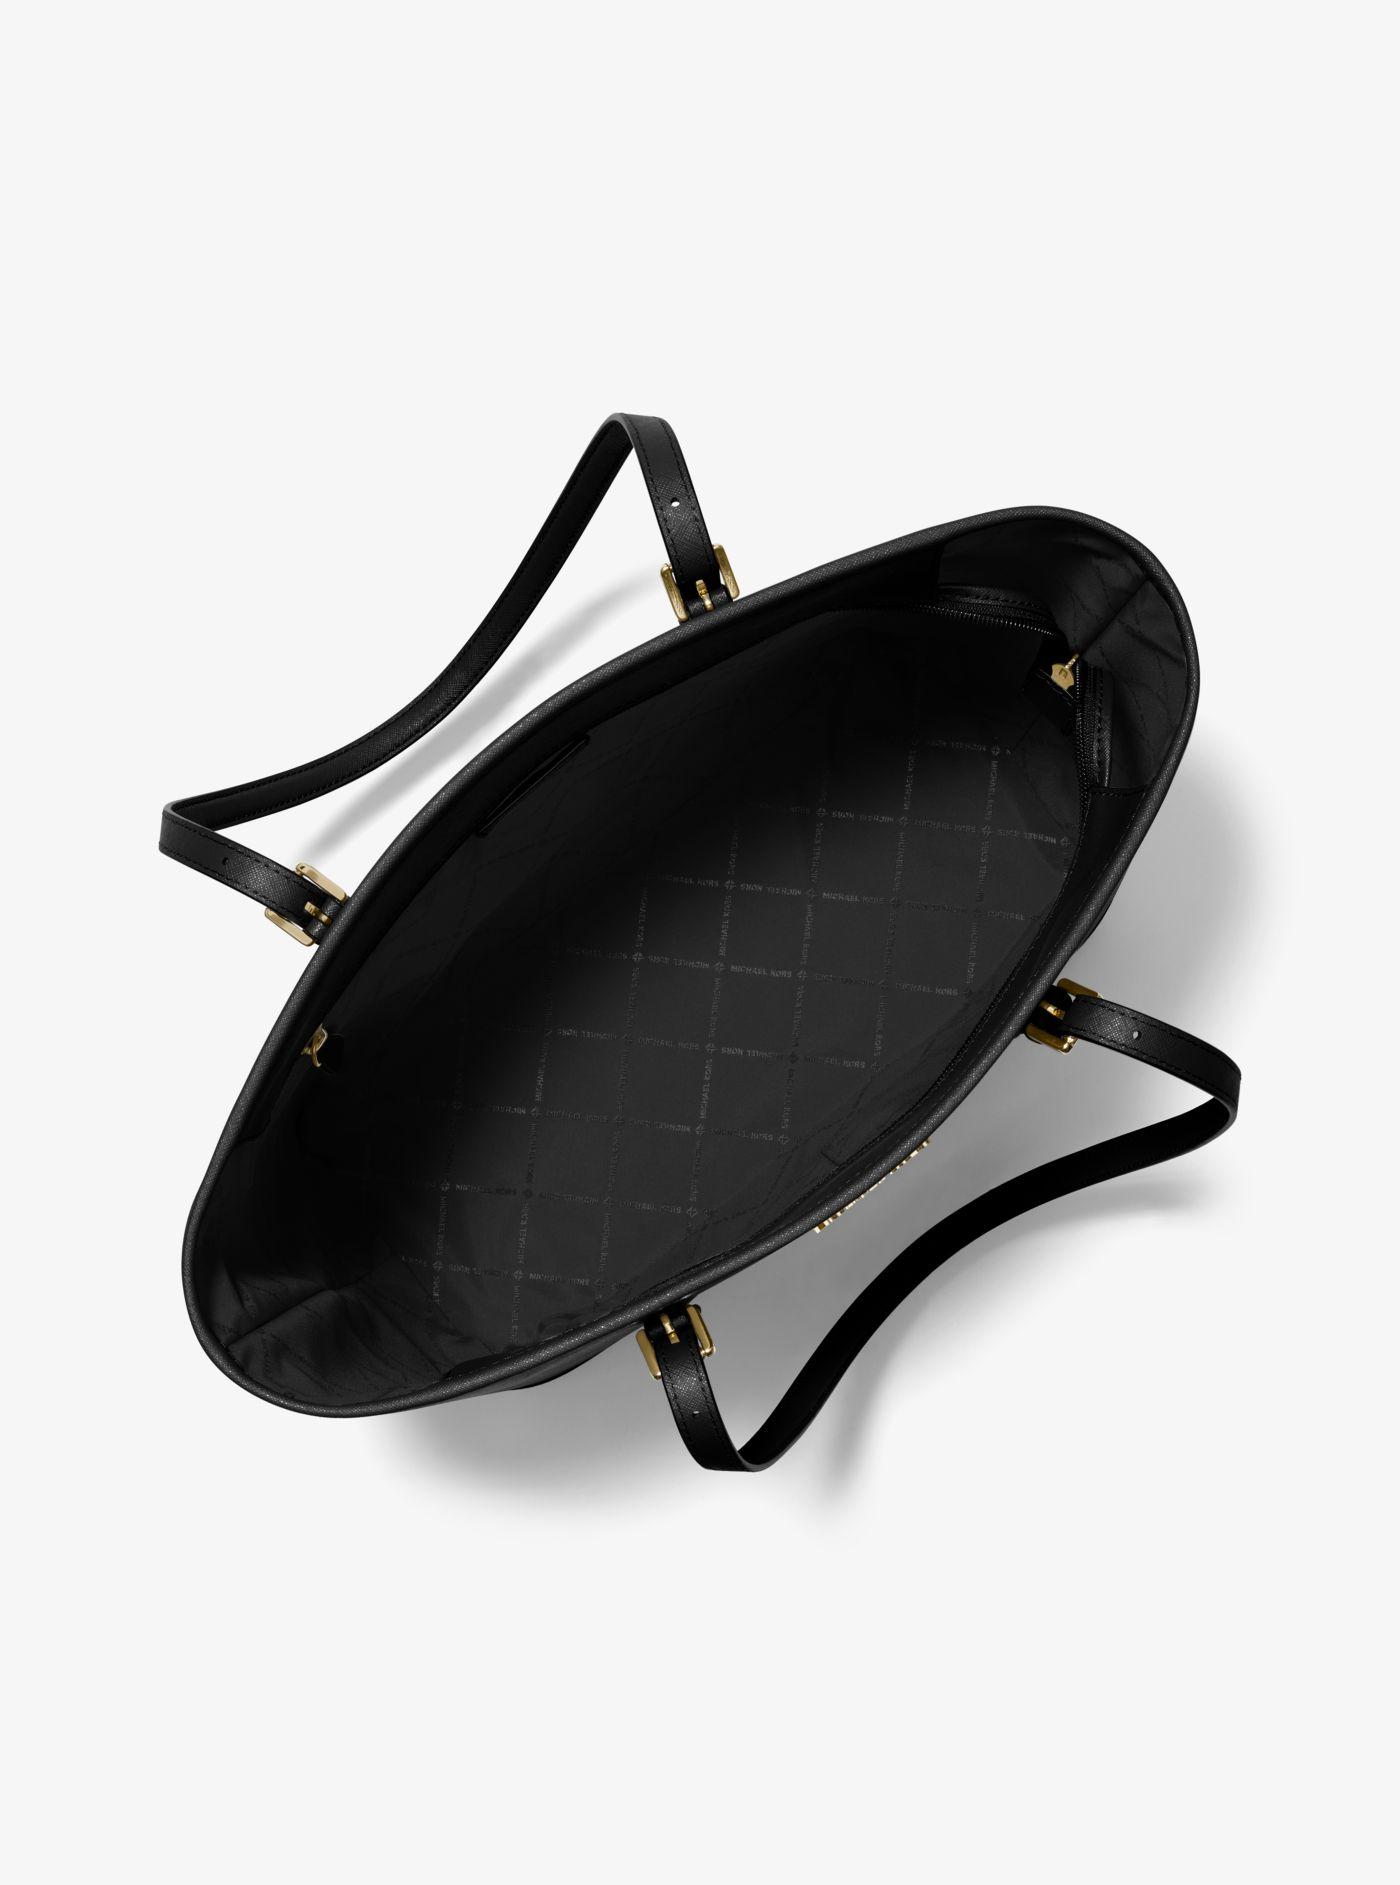 Michael Kors Jet Set Travel Large Saffiano Leather in Black | Lyst